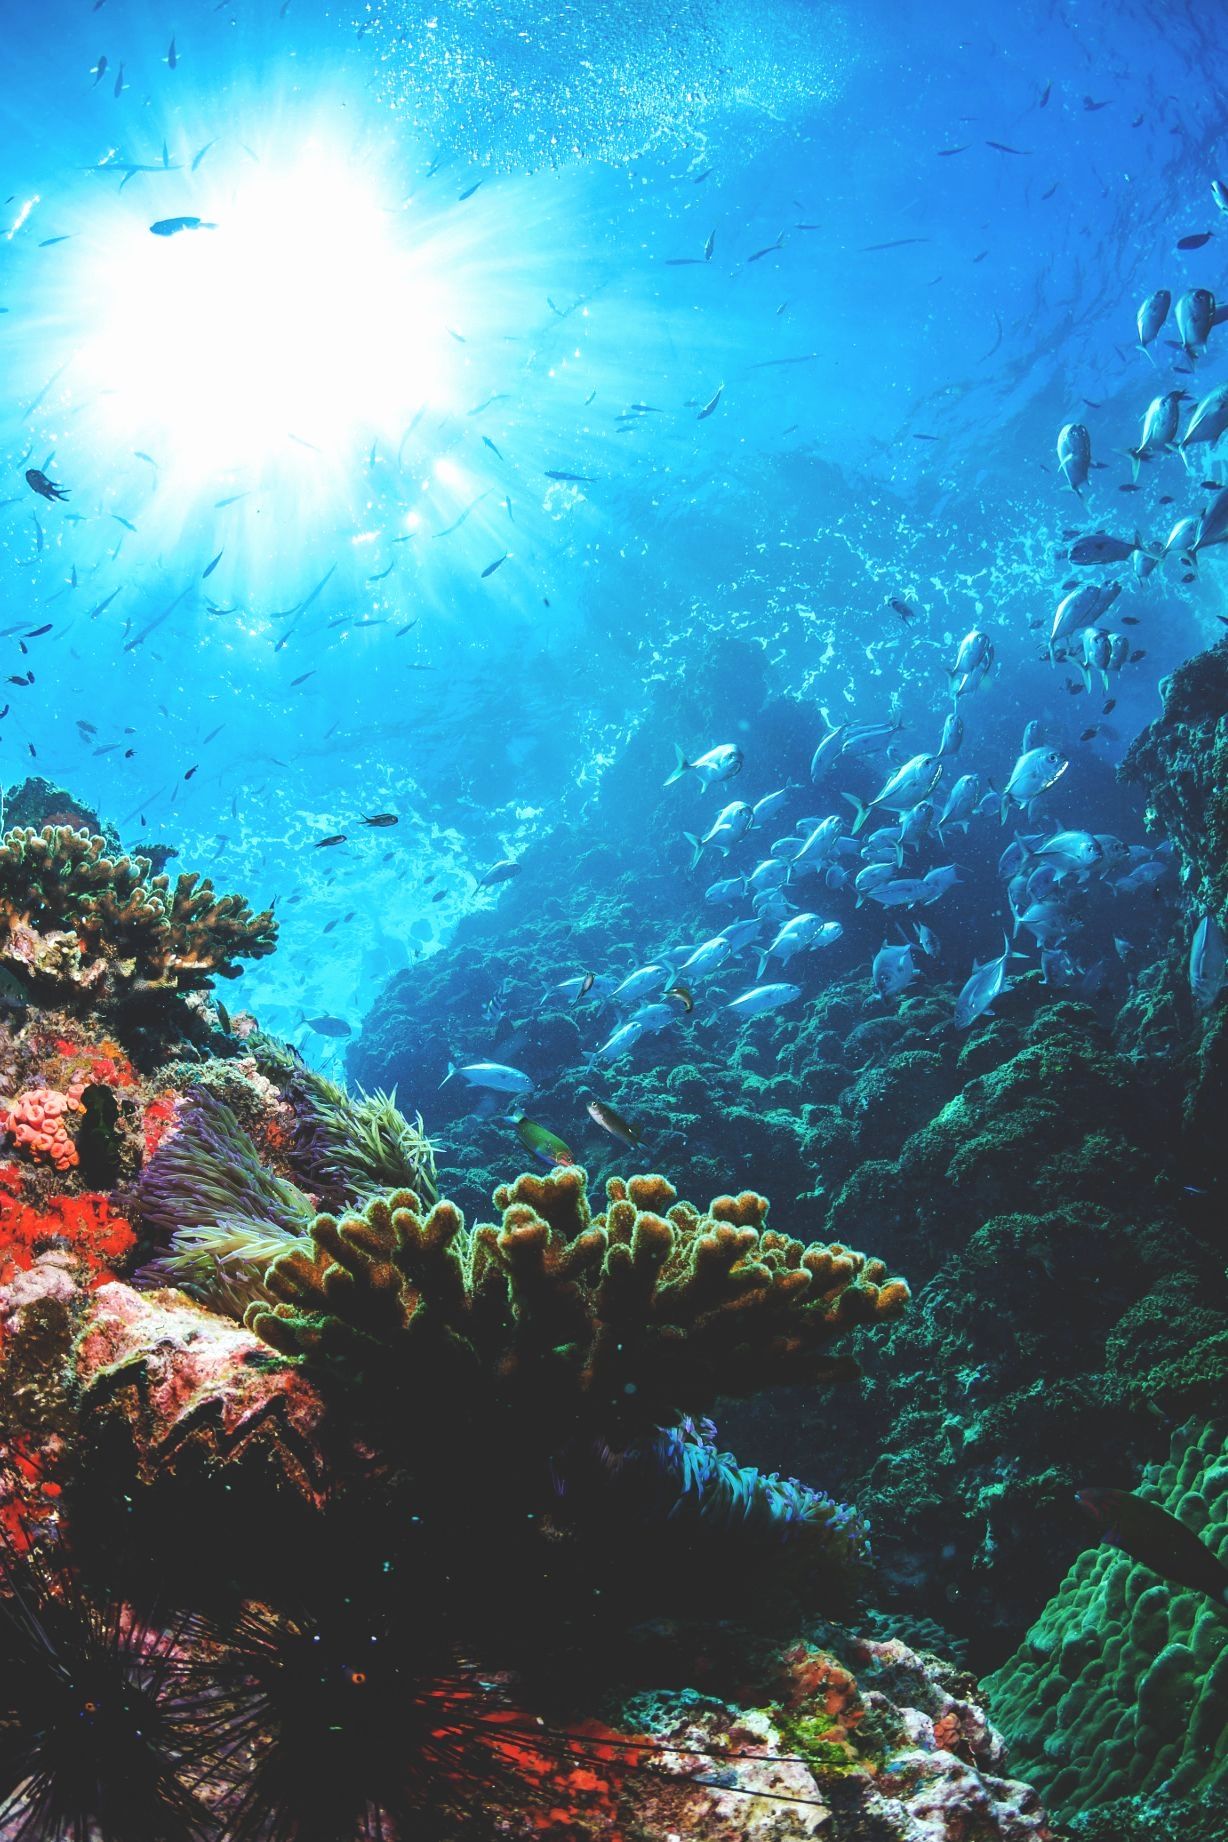 Underwater Ocean Wallpaper Fresh Dreamy Underwater Bubbles Sun Light iPhone 8 Wallpaper 2019 of The Hudson